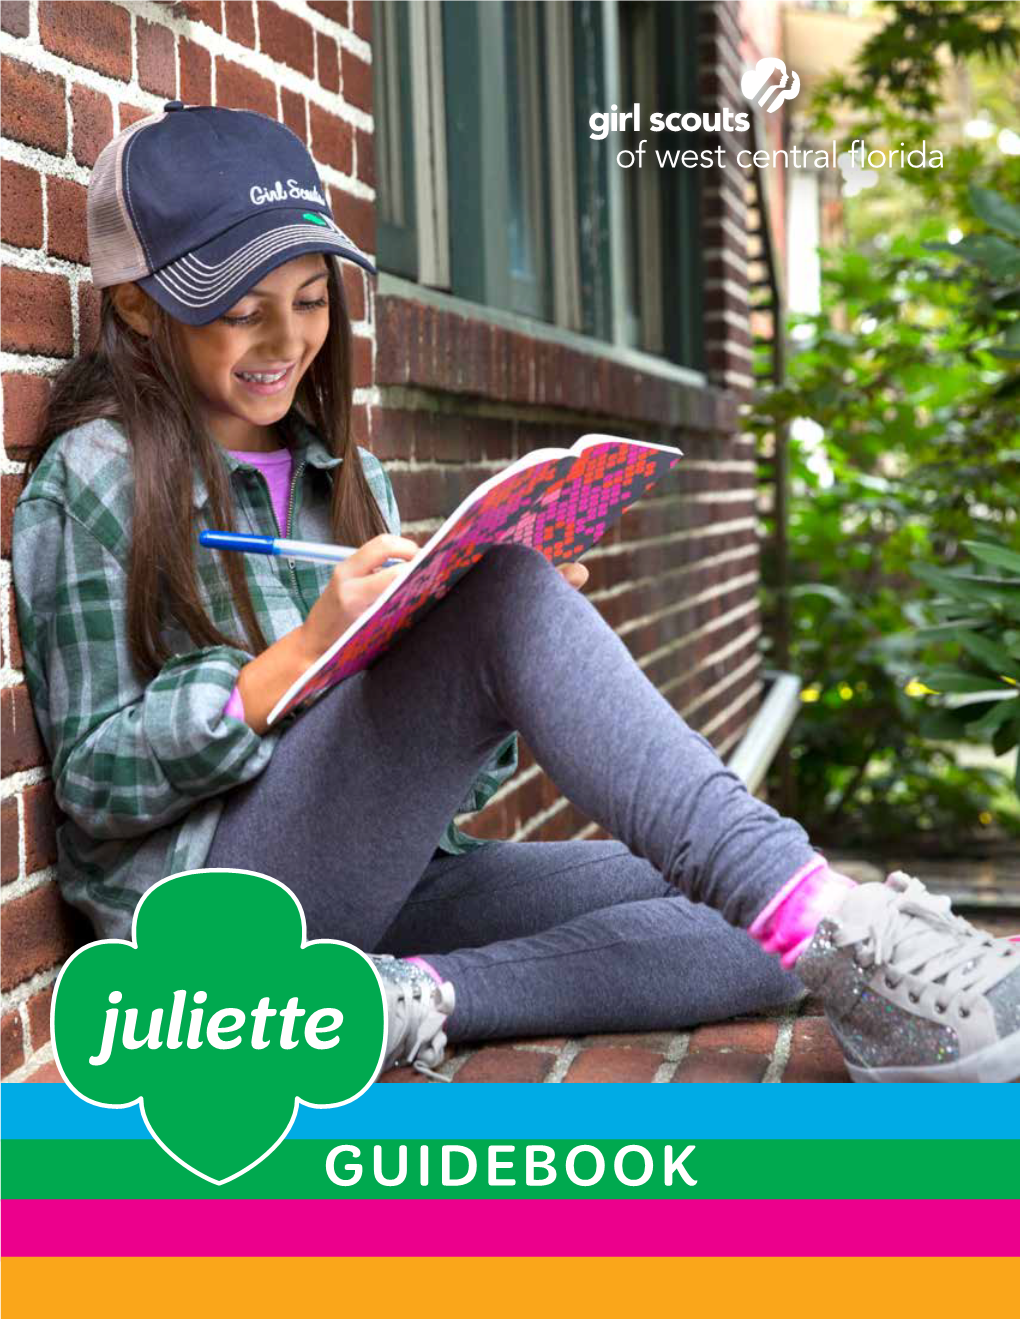 GSWCF Juliette Guidebook.Pdf